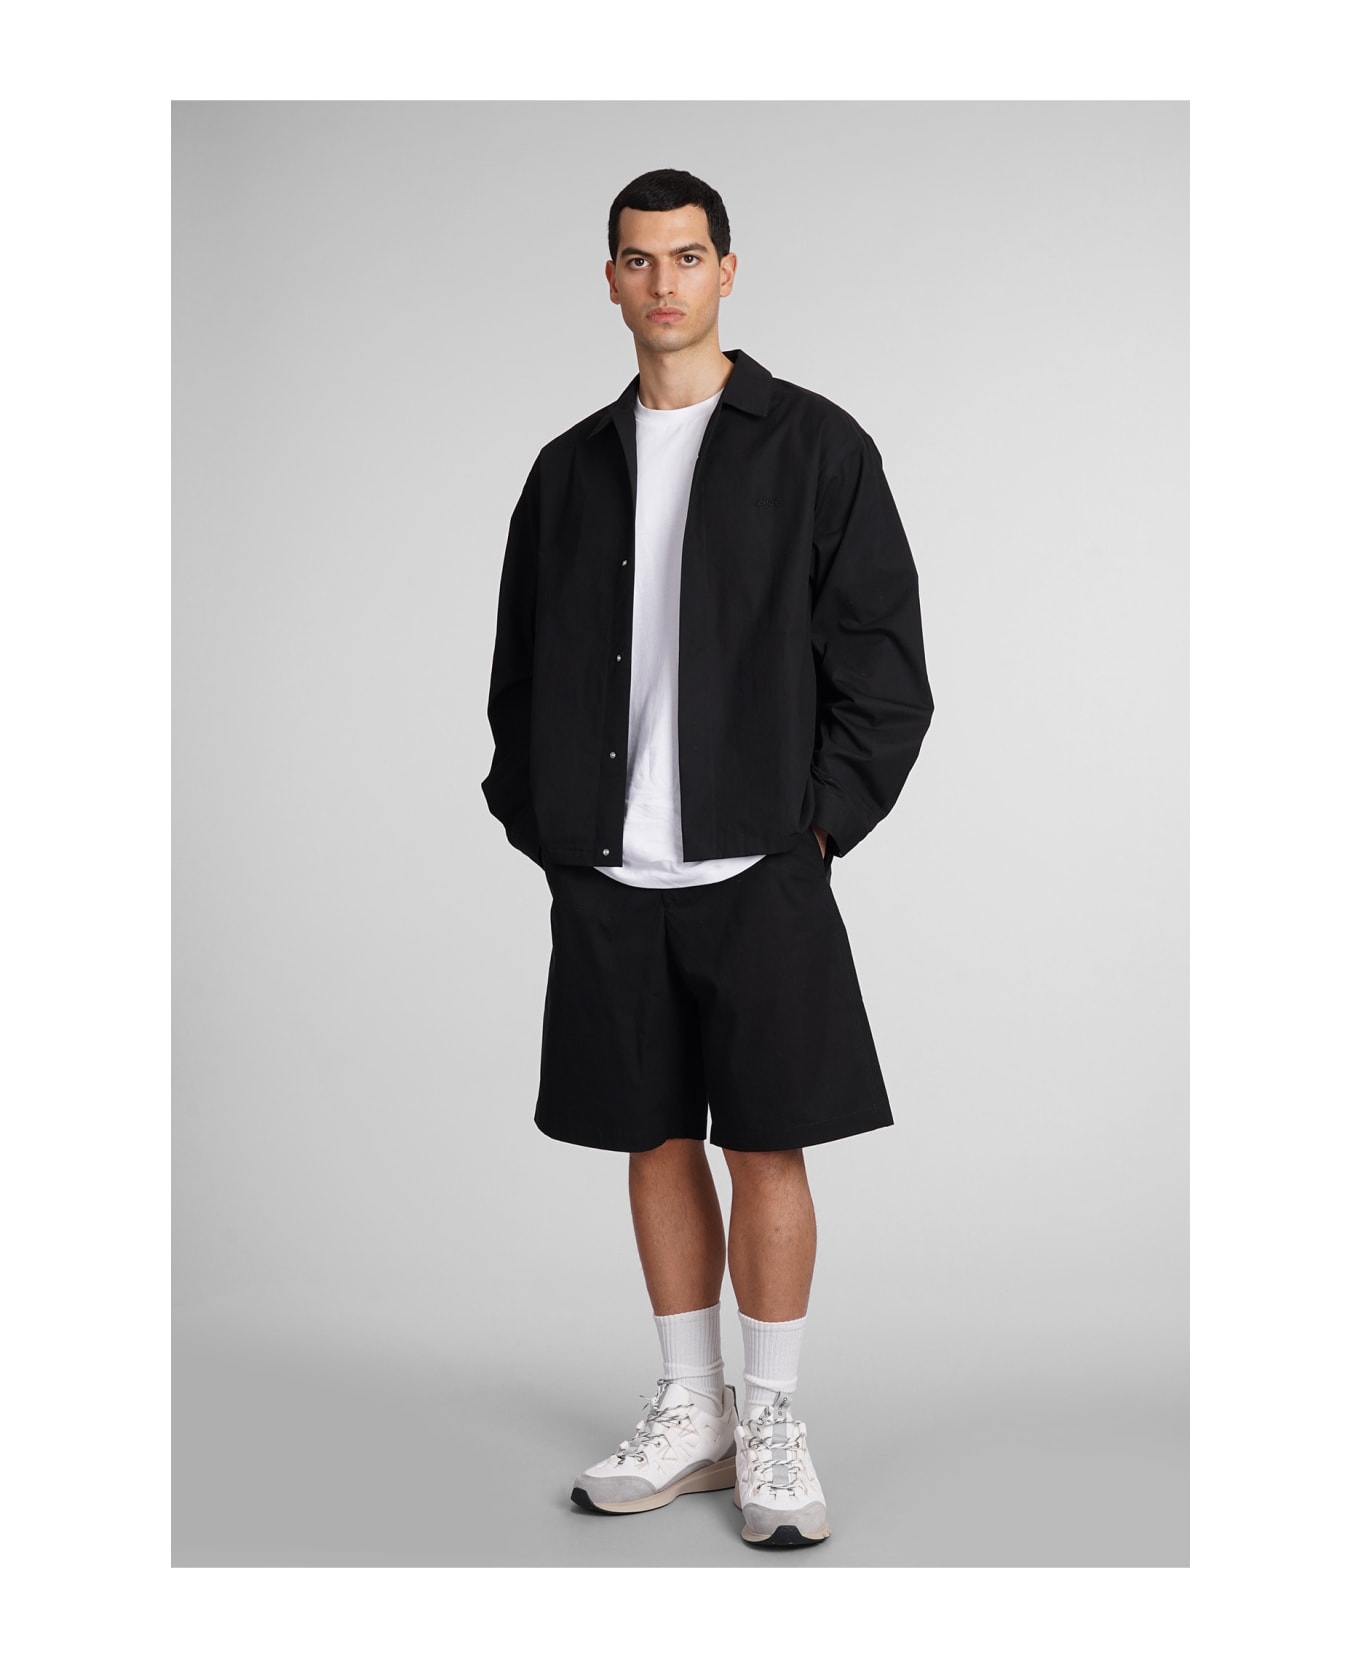 OAMC Vapor Shorts In Black Cotton - black